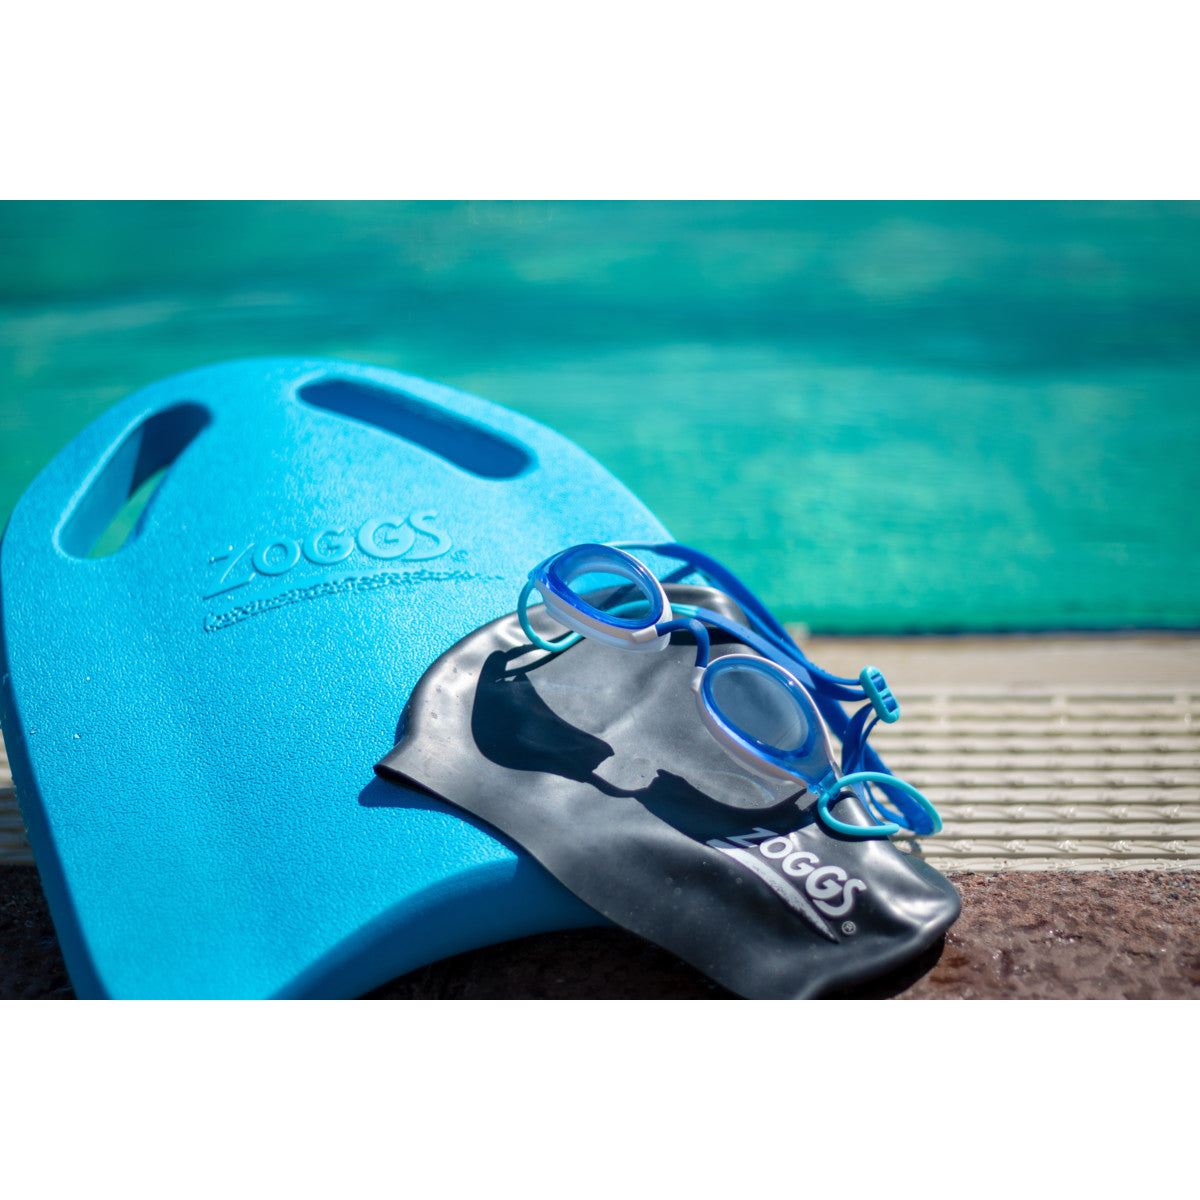 Zoggs Fusion Air Adult Swim Goggles